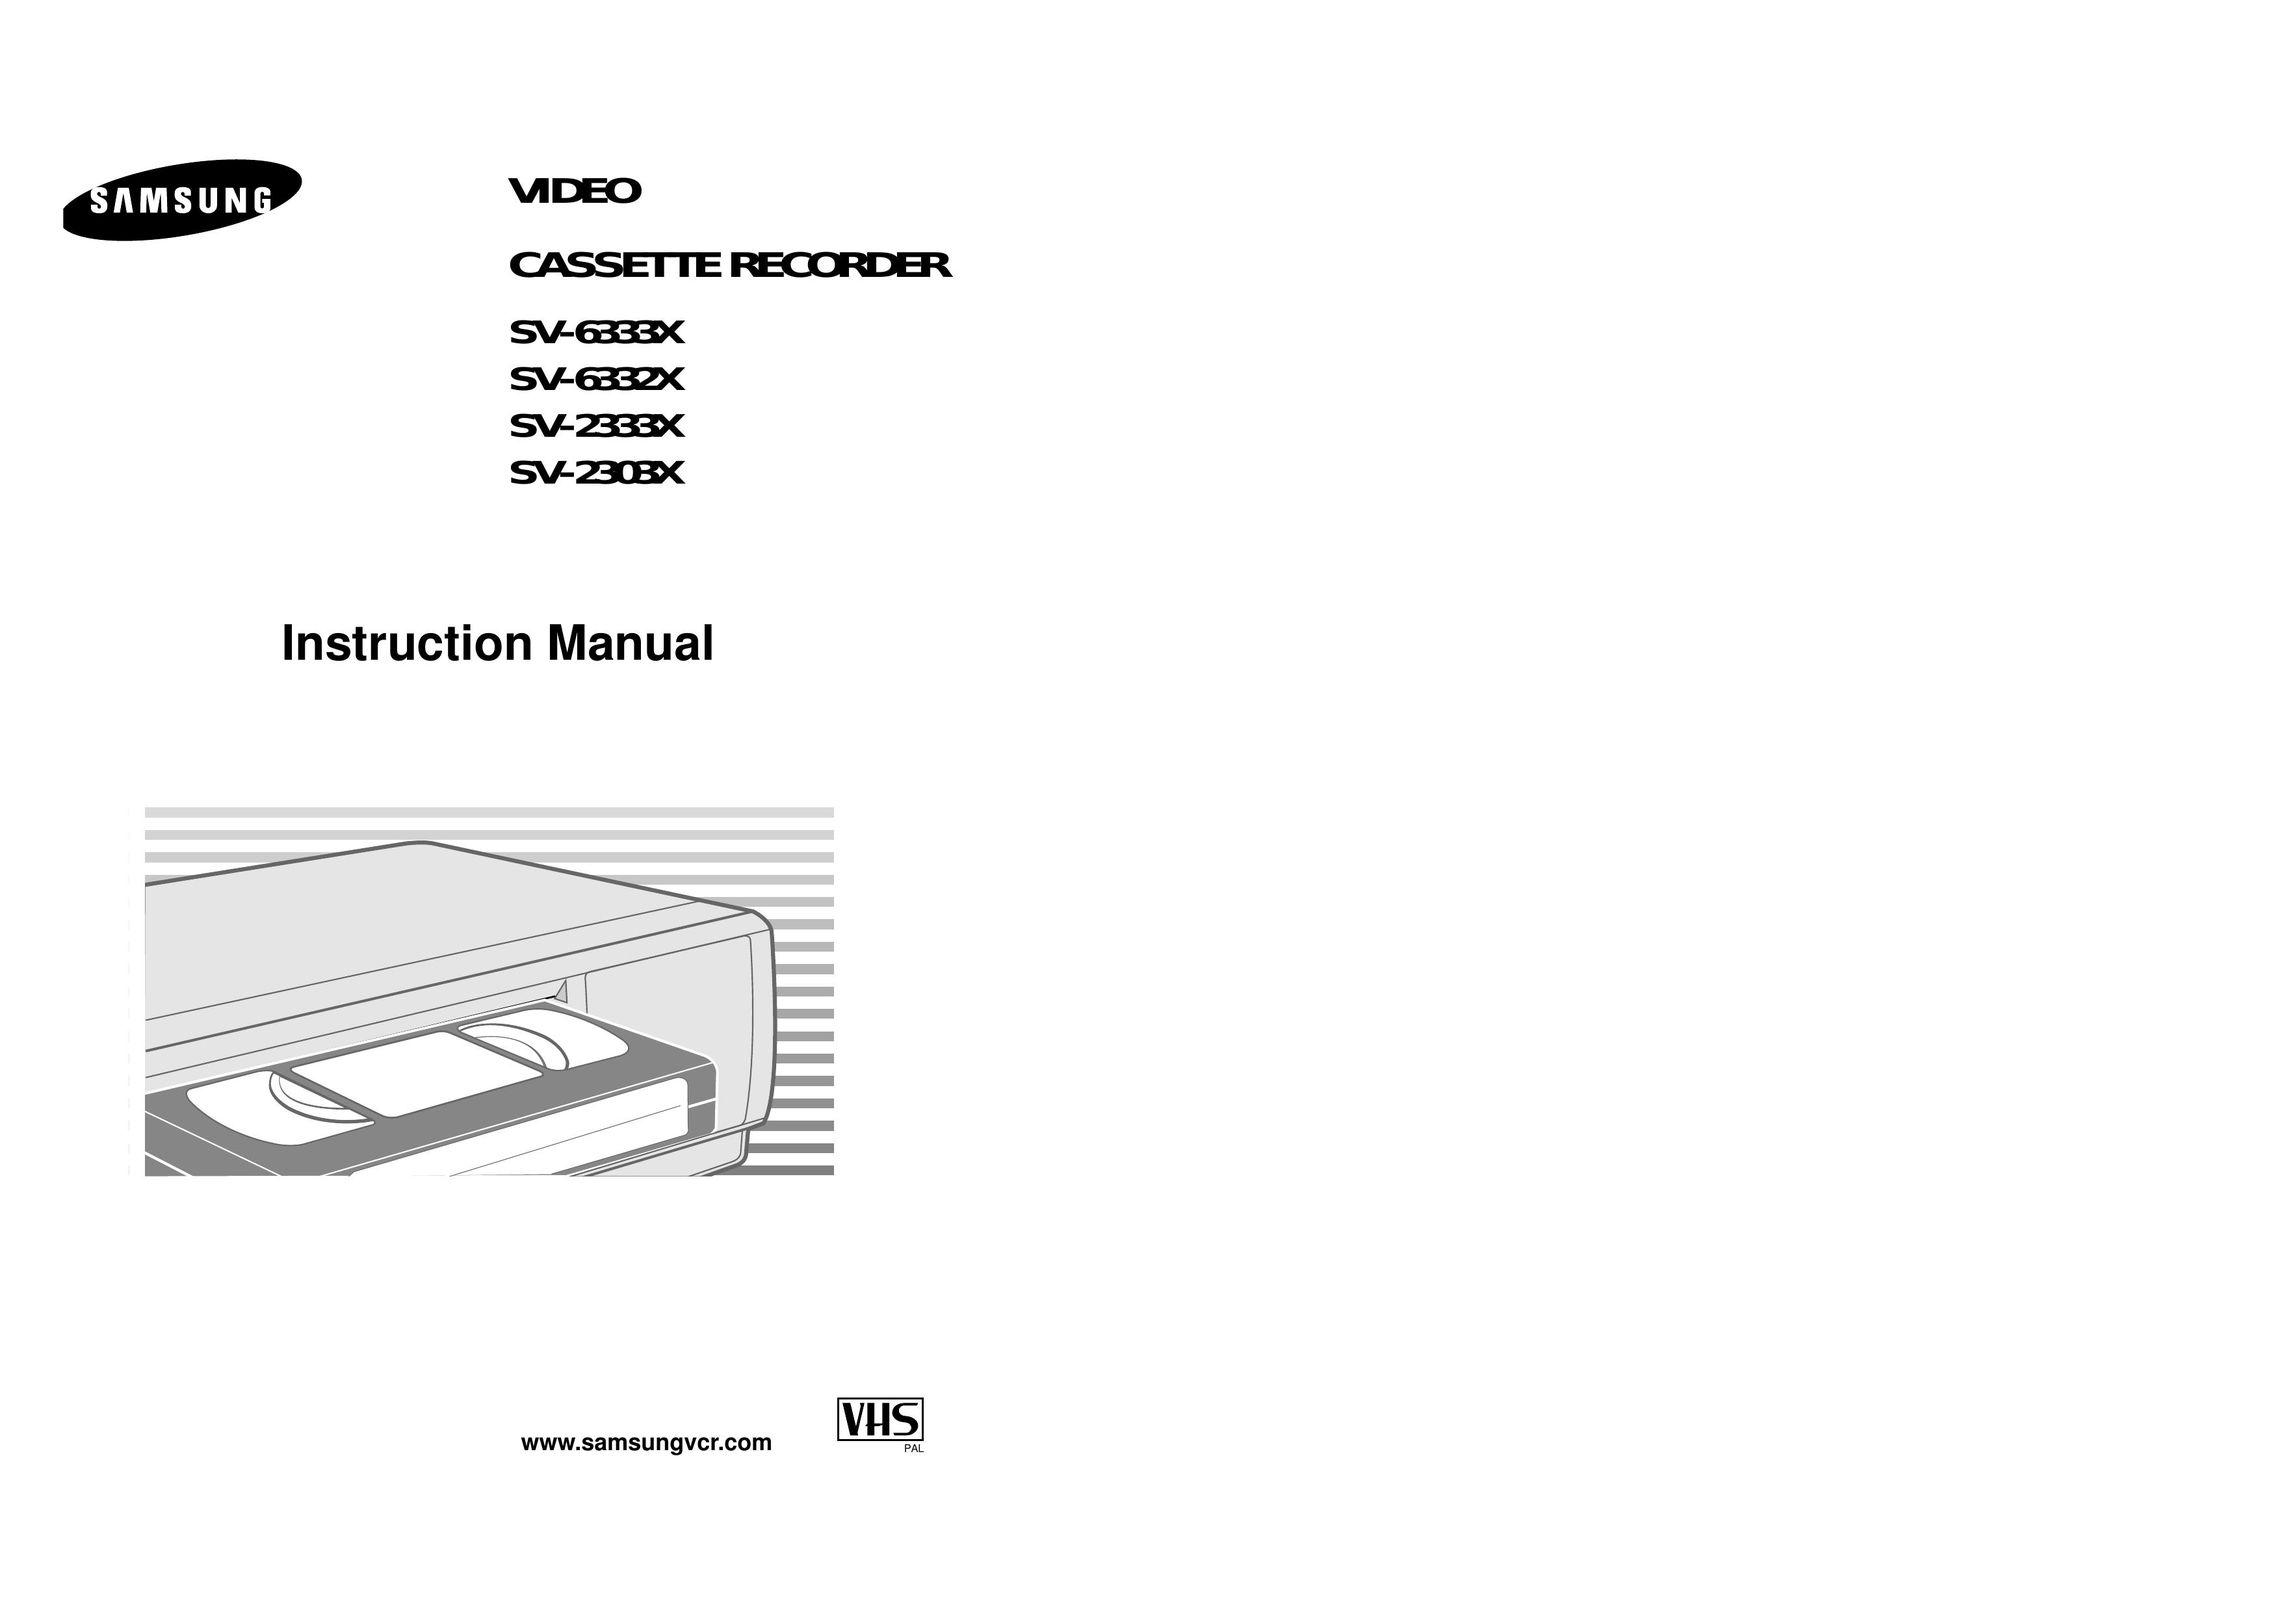 Samsung SV-2333X VCR User Manual